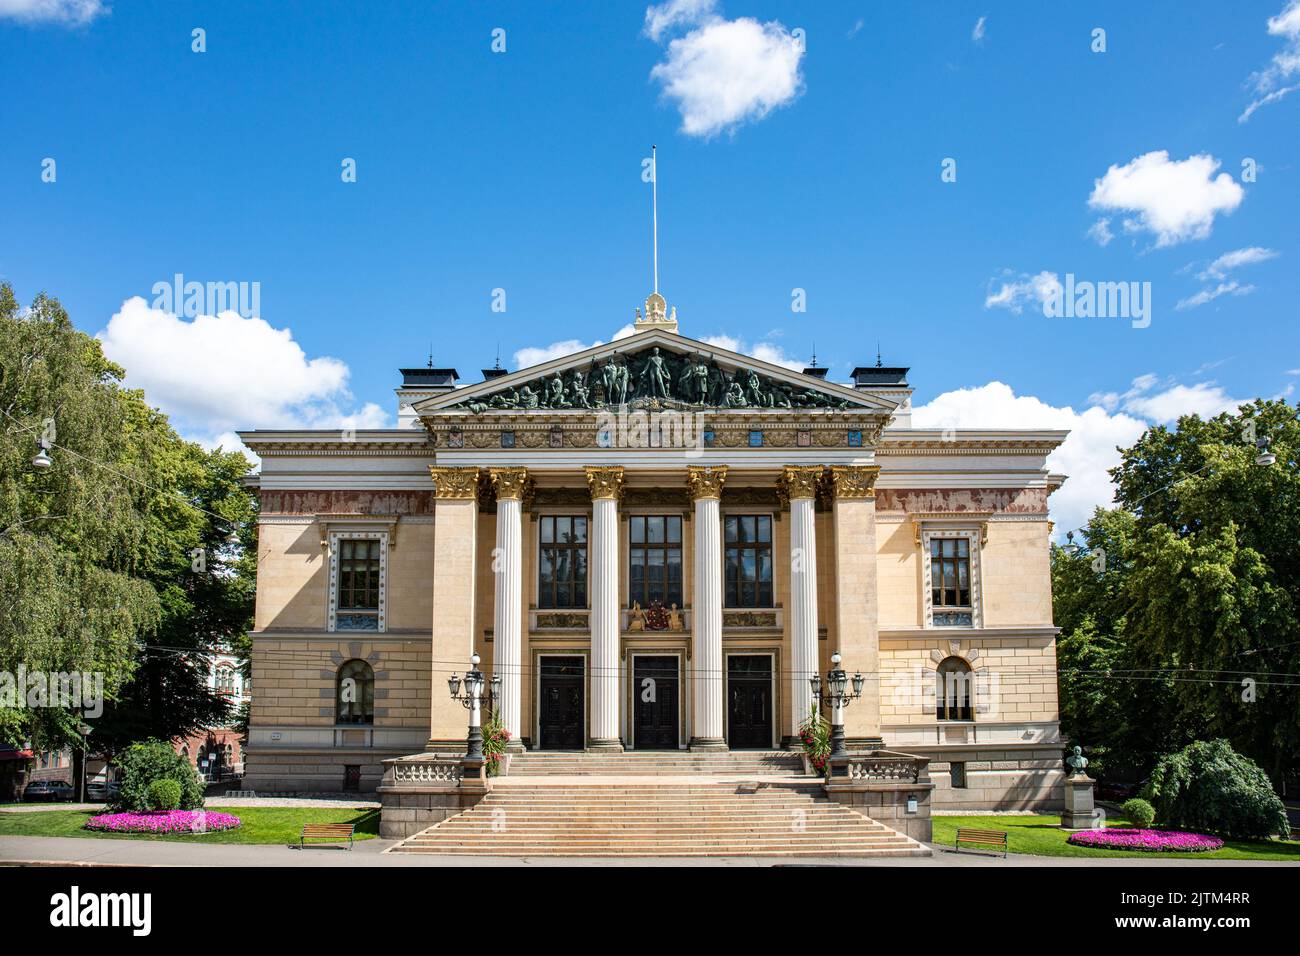 Säätytalo o Casa del Estado en Helsinki, Finlandia Foto de stock